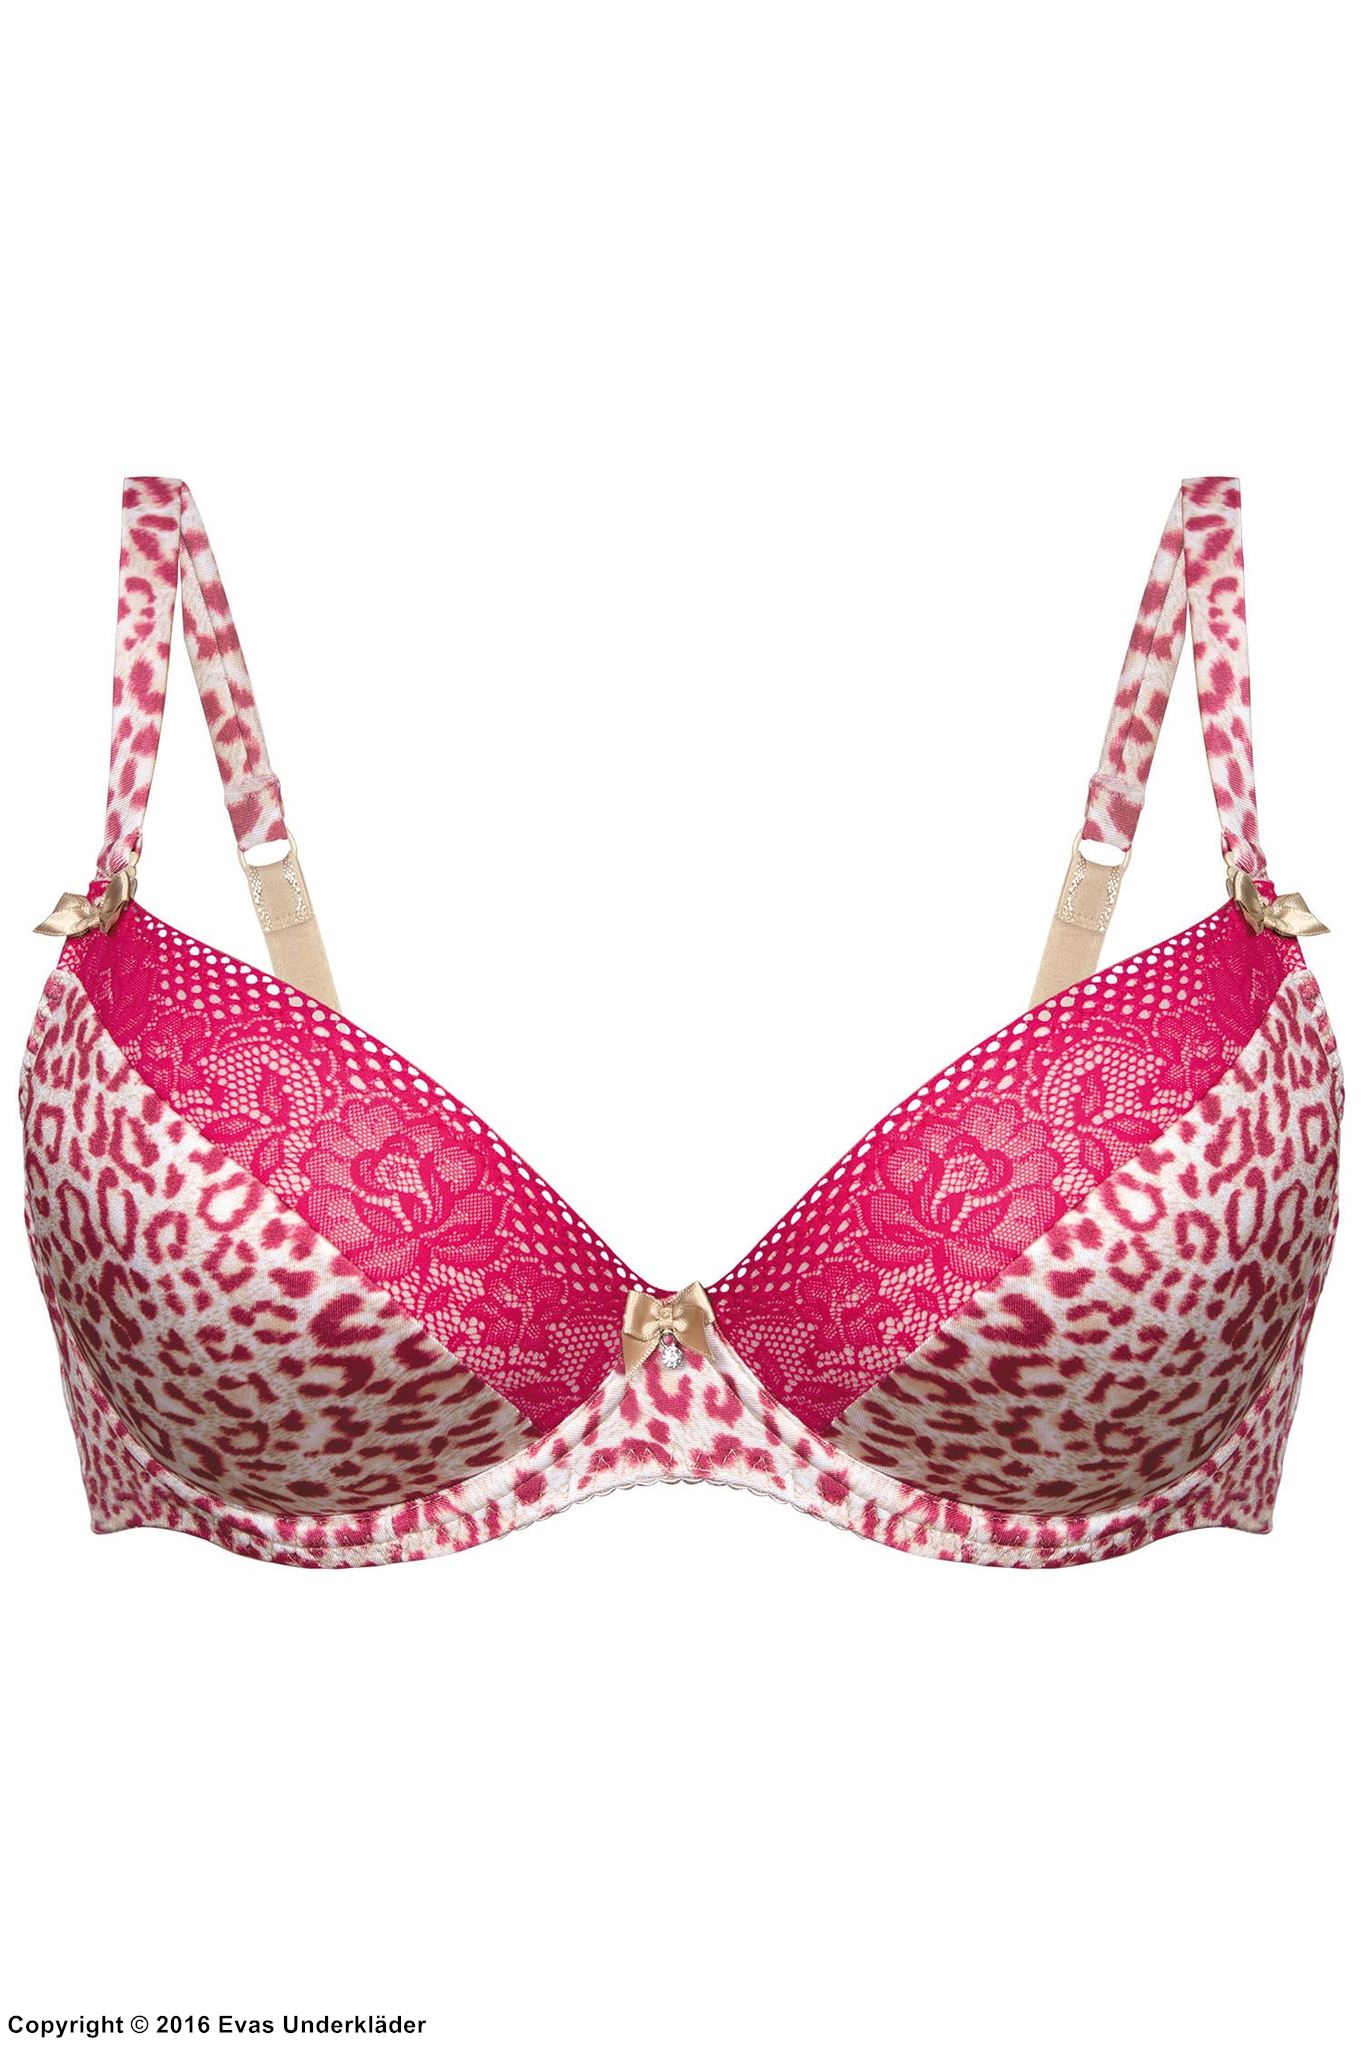 Push-up bra, microfiber, floral lace, leopard (pattern)